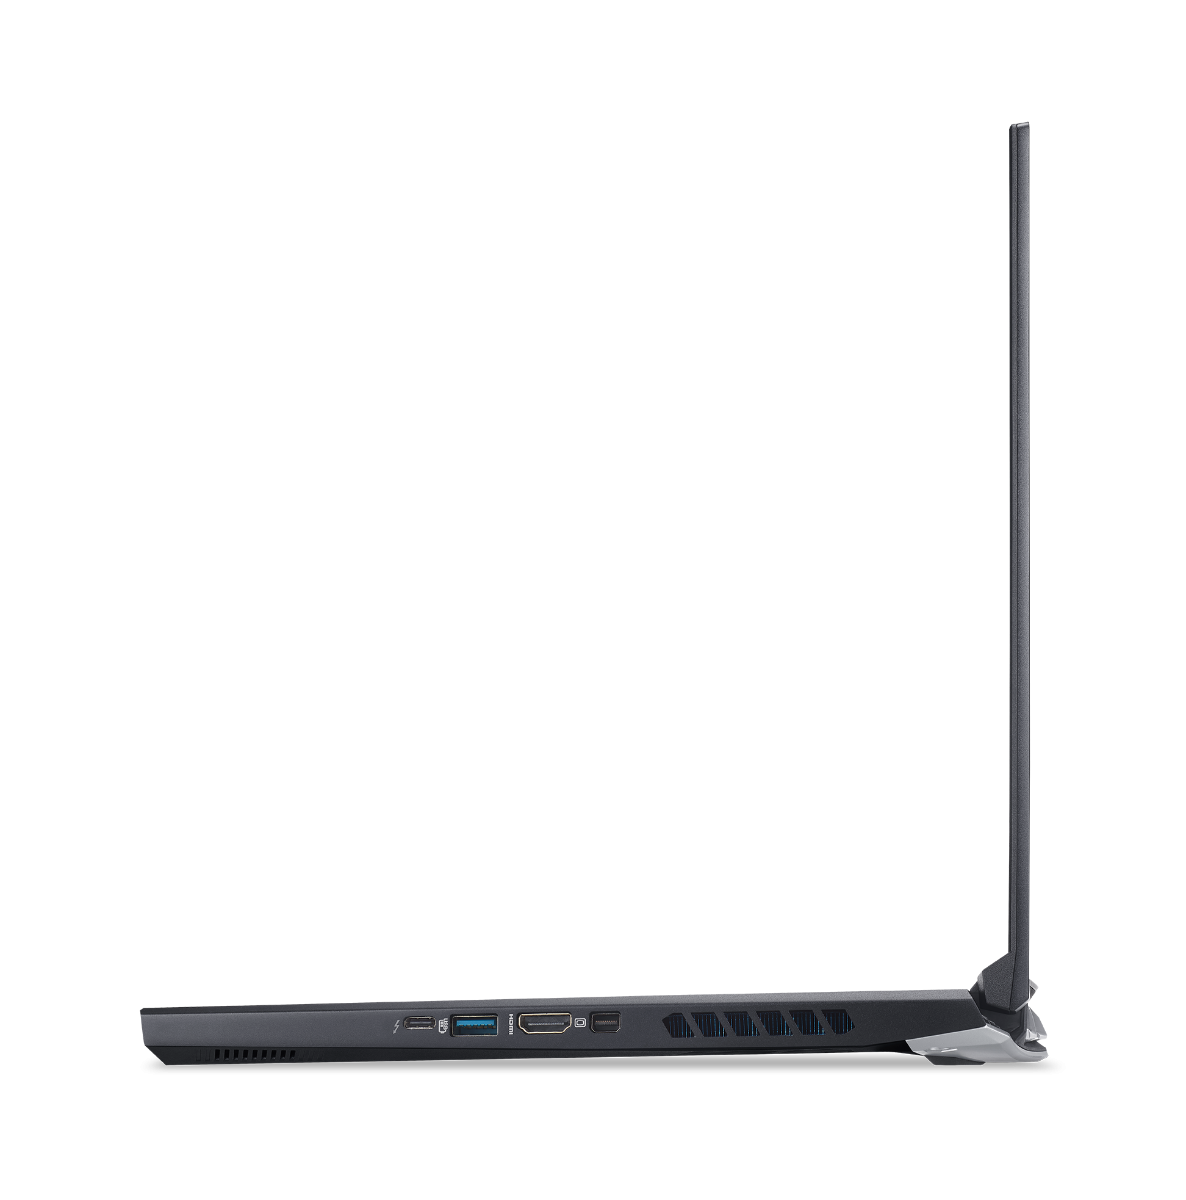 Acer Predator Helios 300 Gaming Laptop Intel Core I9 11th Gen